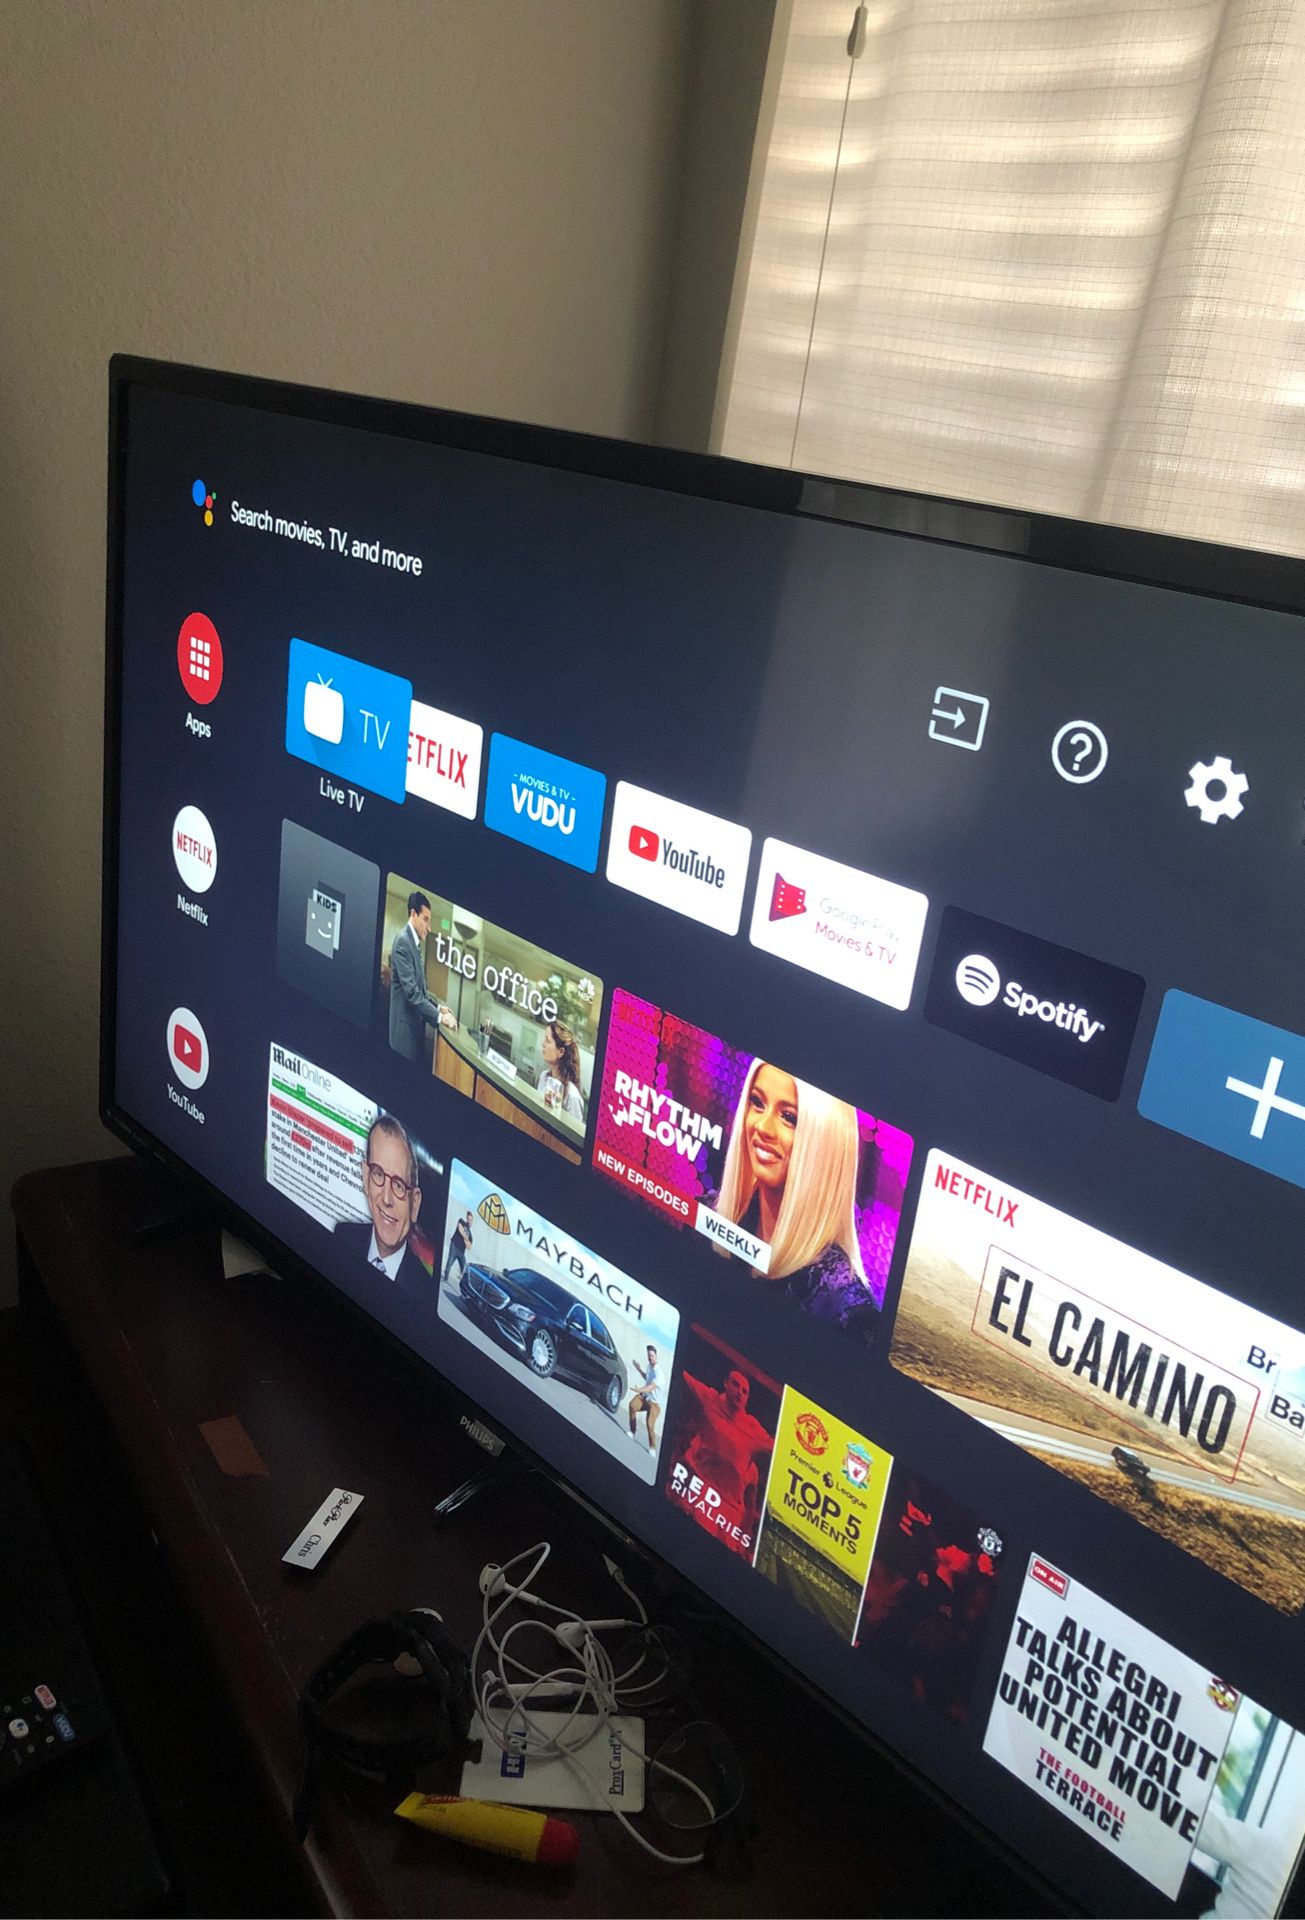 42 inch Philips tv with Hulu,netflix,spotify etc still brand new